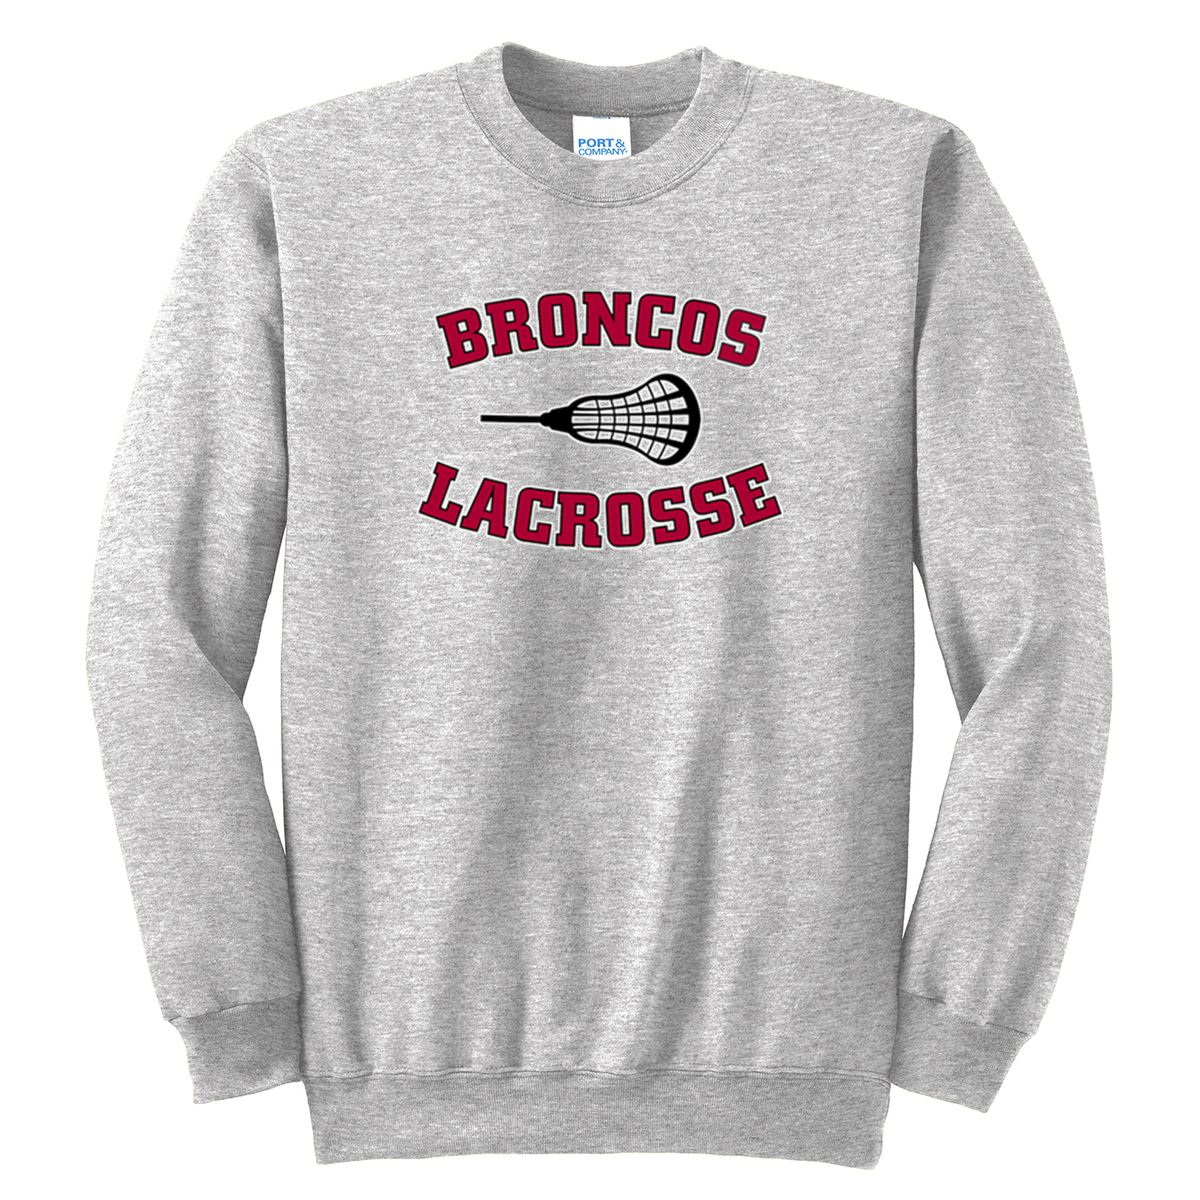 Bailey Middle School Lacrosse Crew Neck Sweater